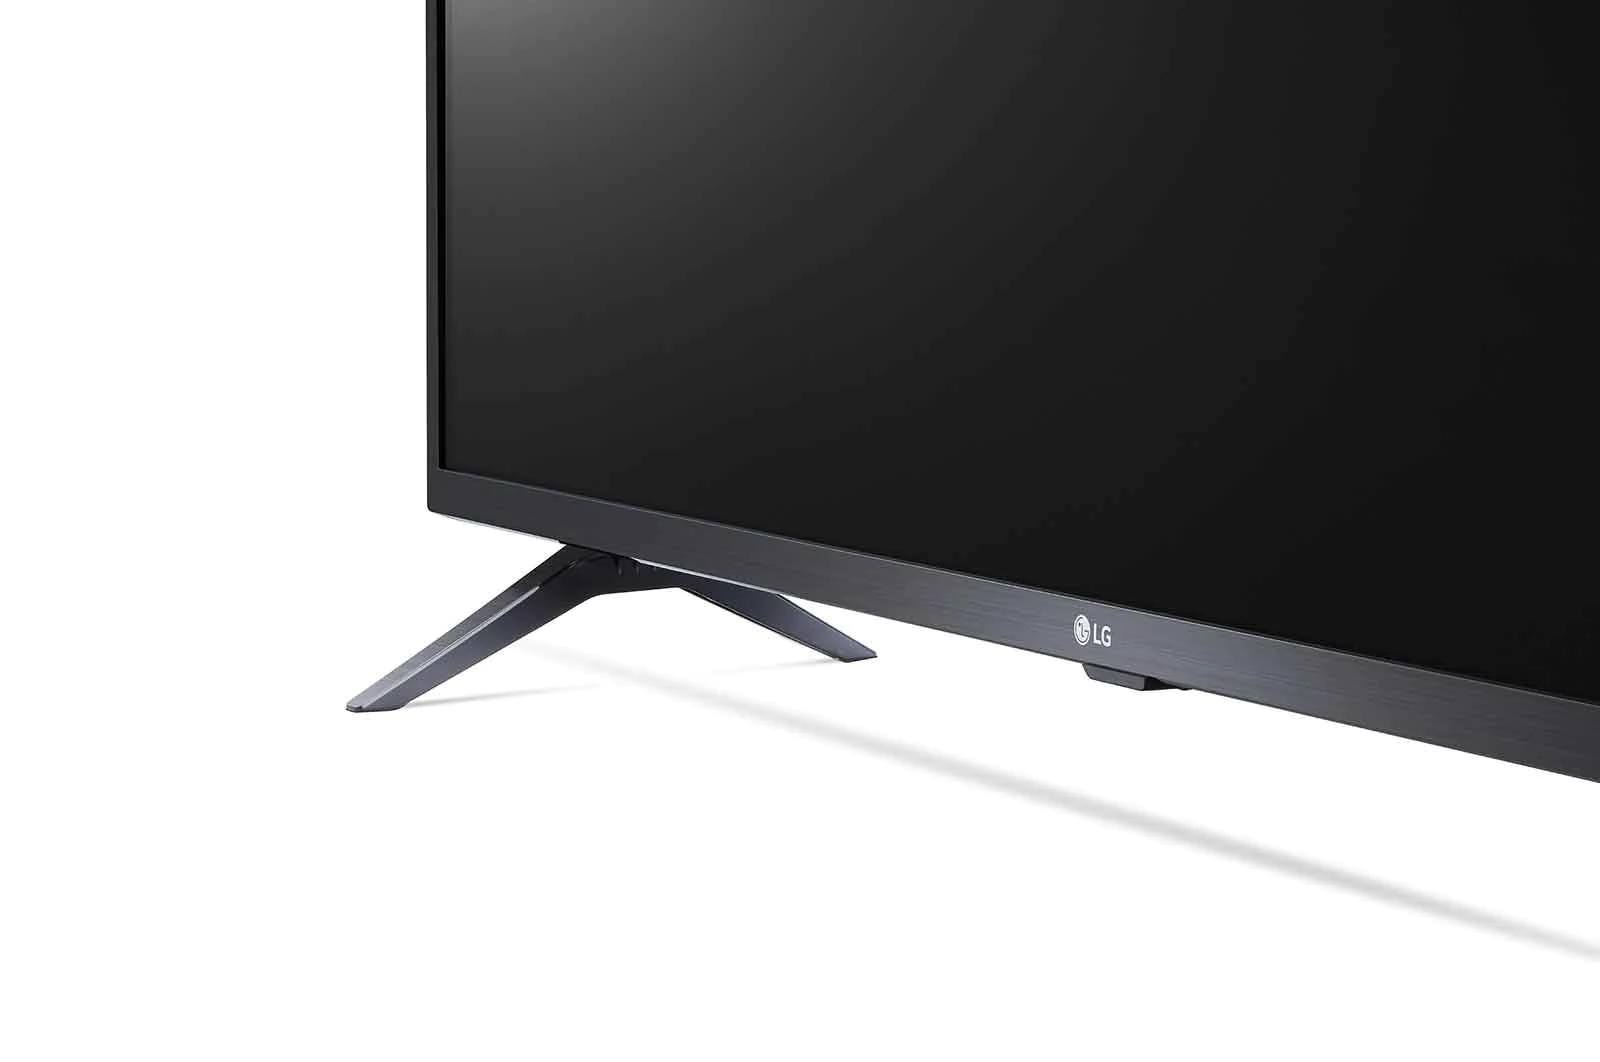 LG LED Smart TV 43 Inch Series Full HDR Smart LED TV - 43LM6370 6